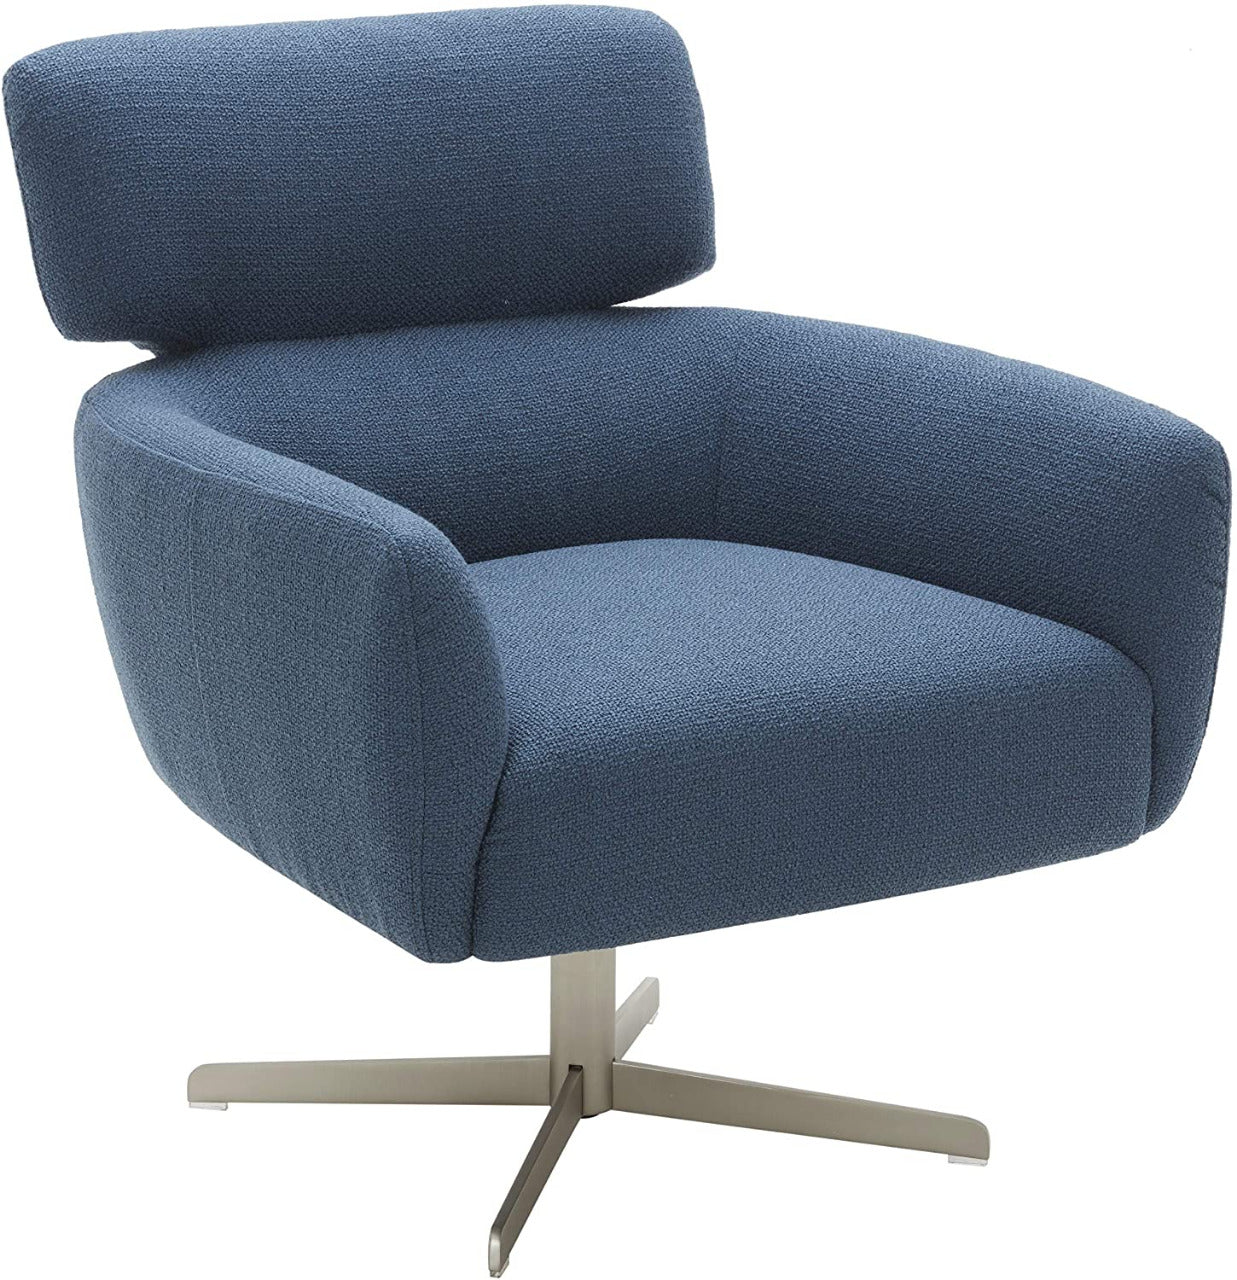 Sofa Chair: Living Room Sofa